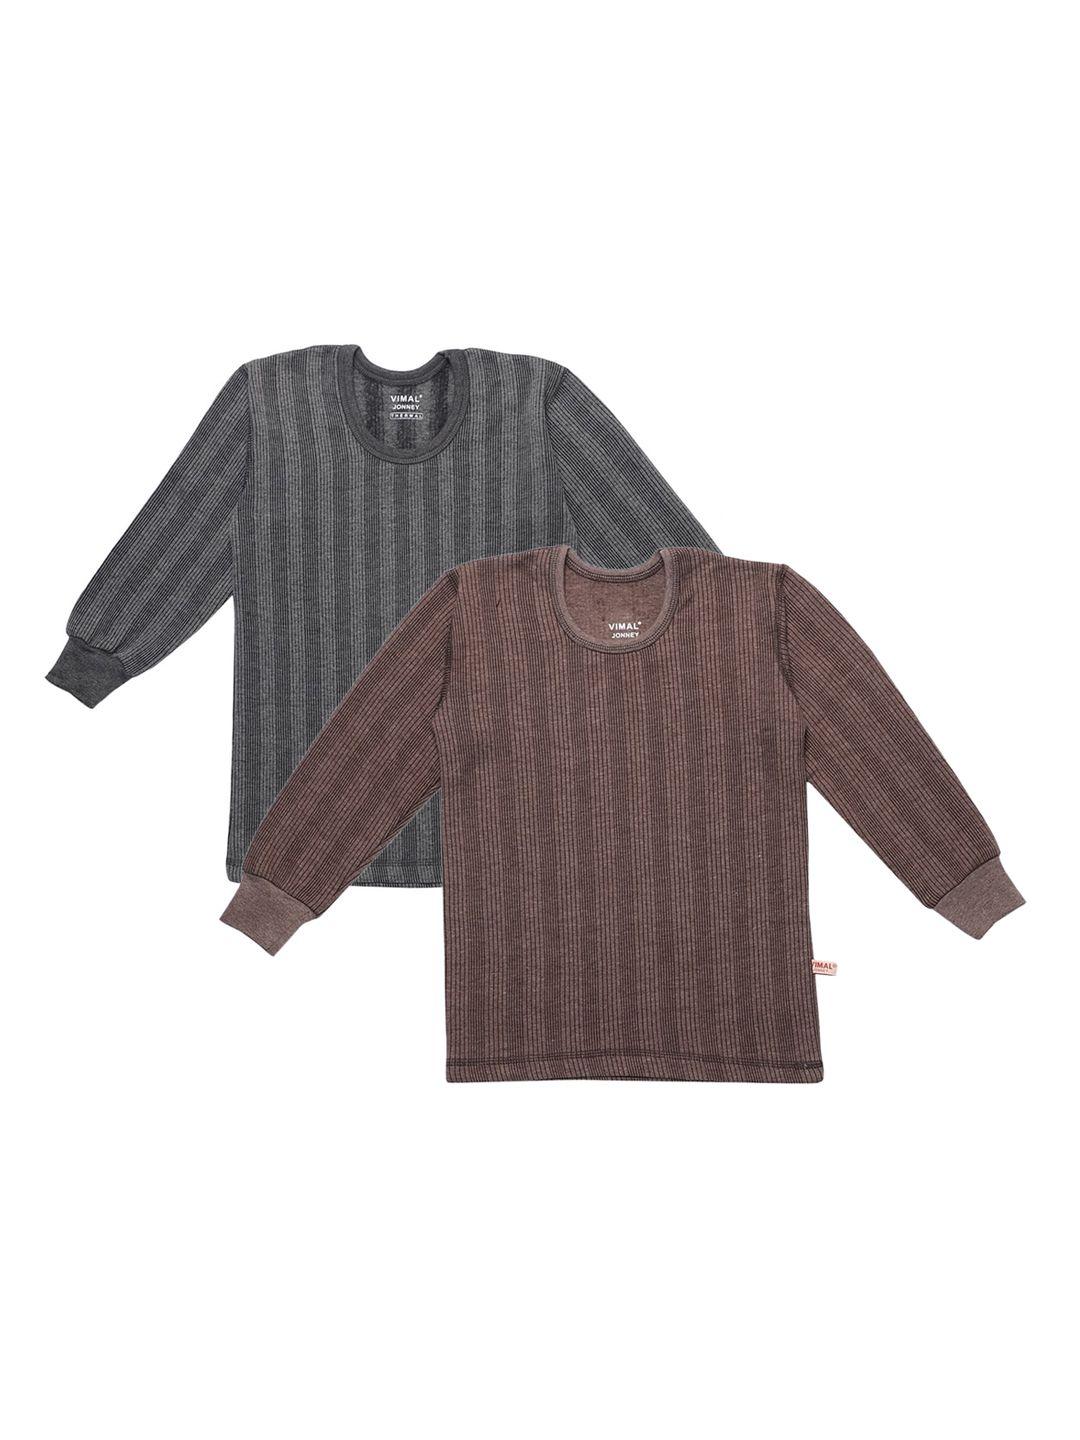 vimal jonney kids pack of 2 brown & charcoal grey self-striped thermal t-shirts